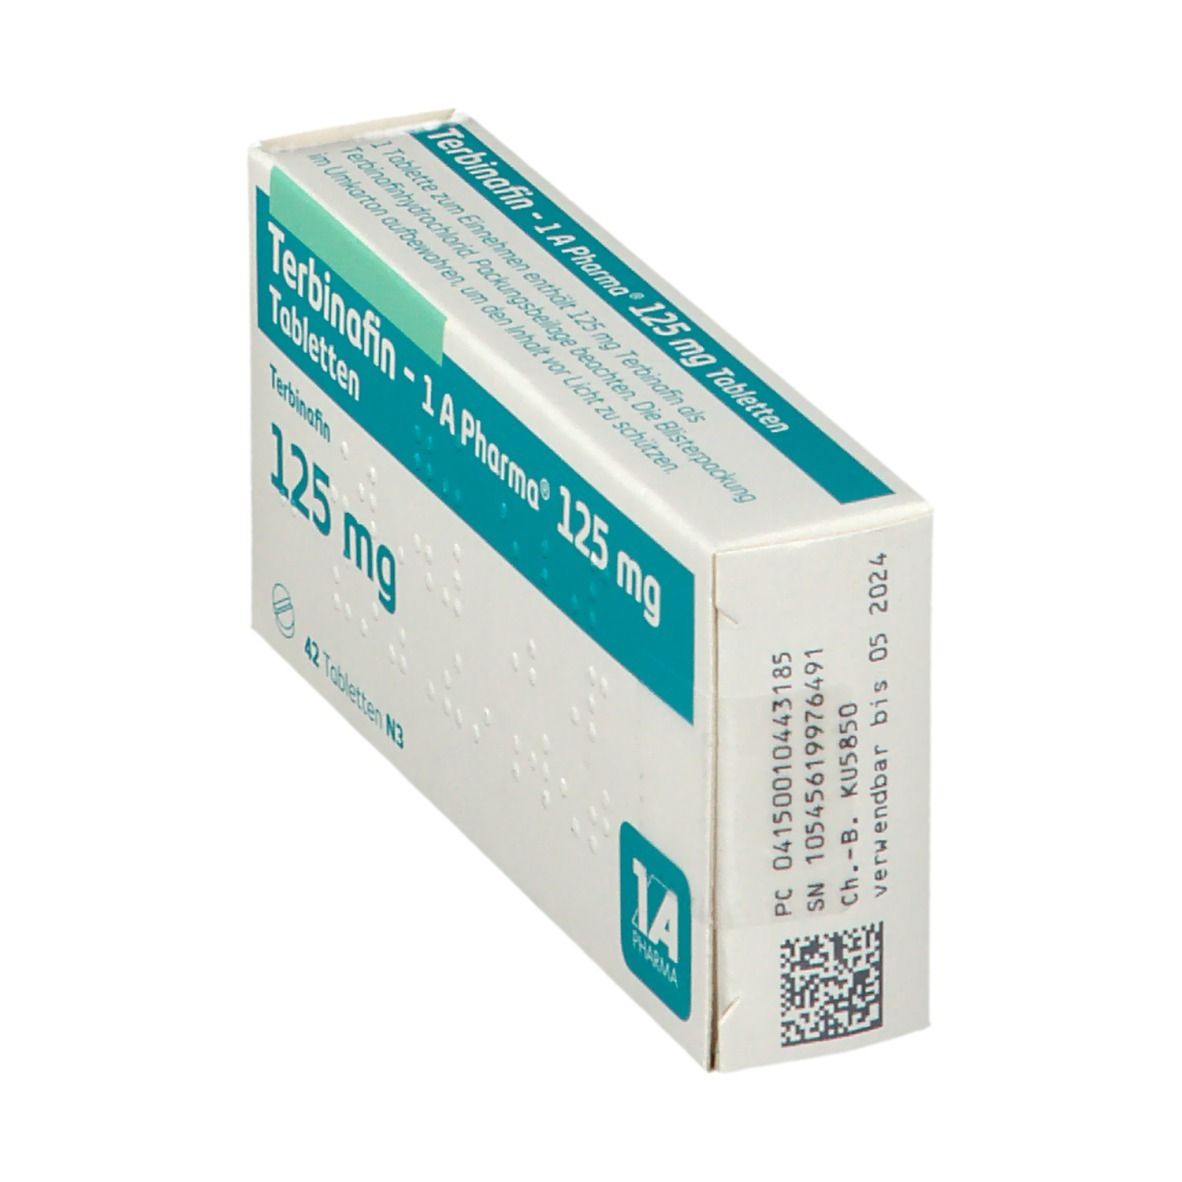 Terbinafin 1A Pharma® 125Mg